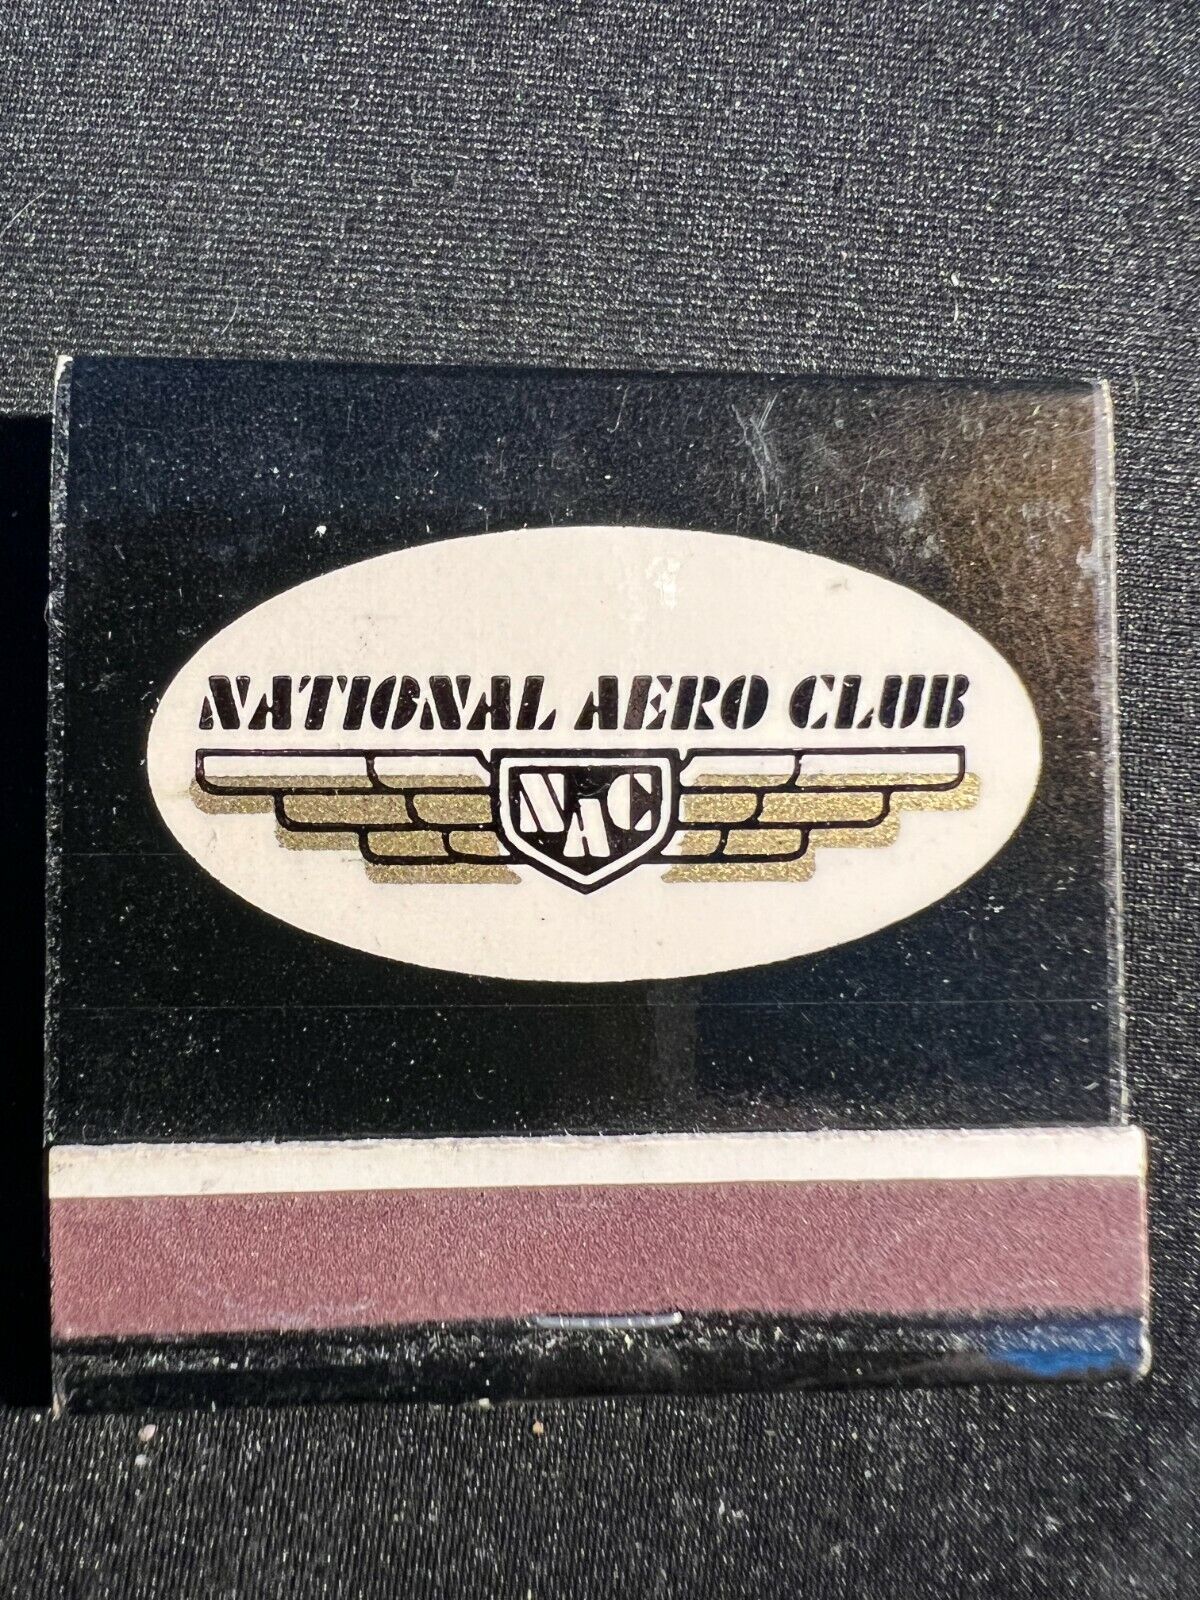 VINTAGE MATCHBOOK - NATIONAL AERO CLUB - NAC - UNSTRUCK BEAUTY